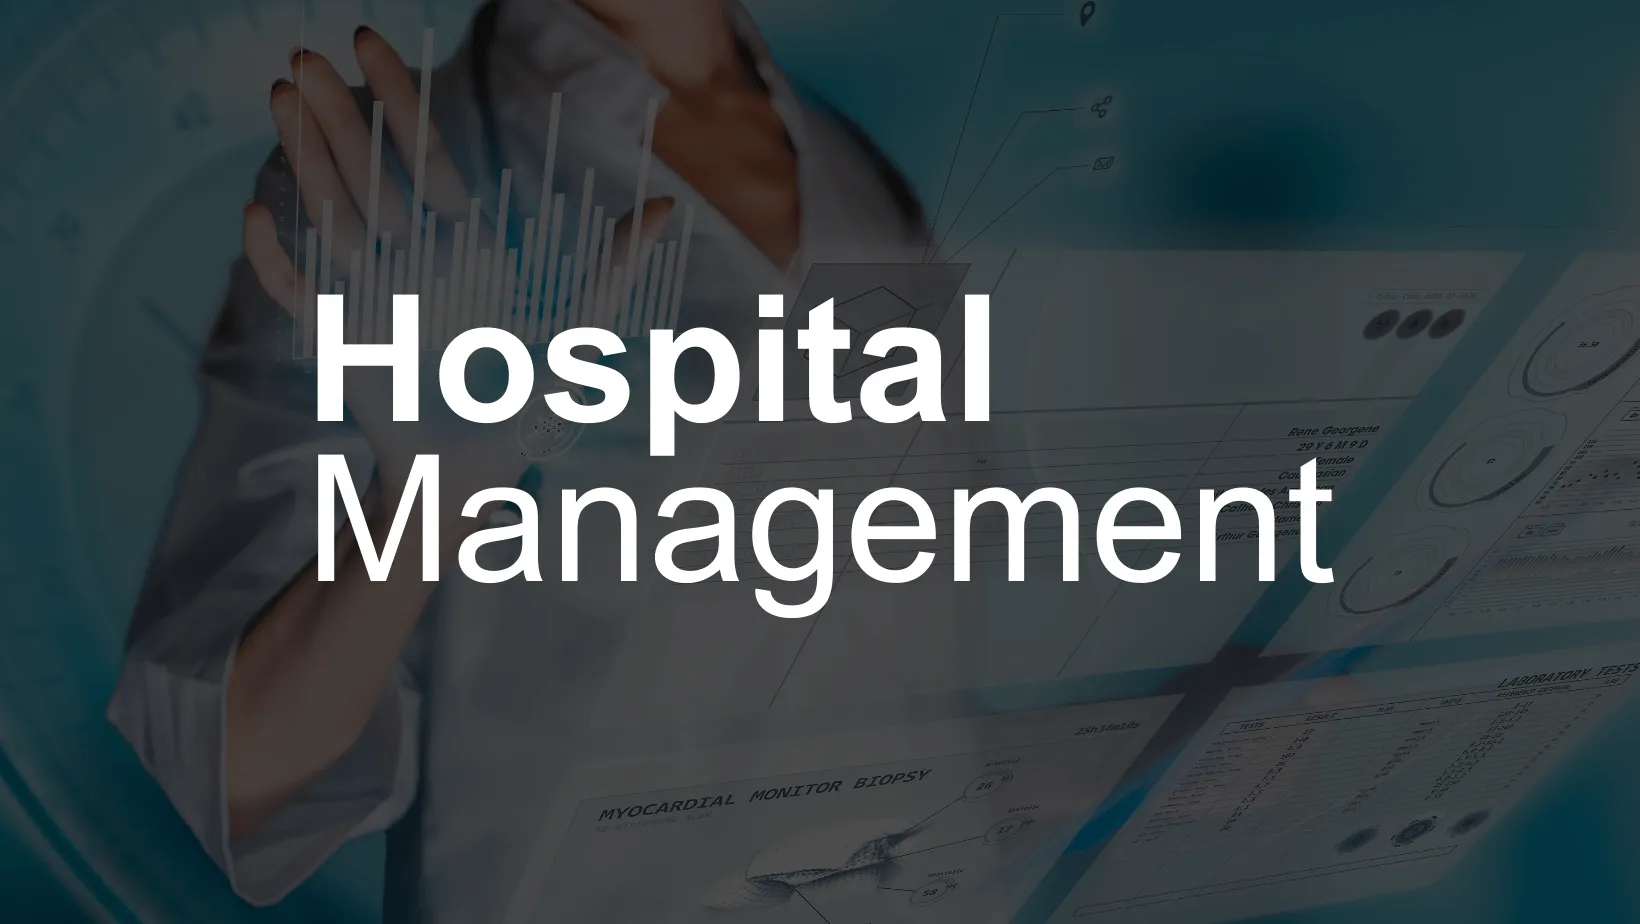 White Hospital Management logo over a dark background.